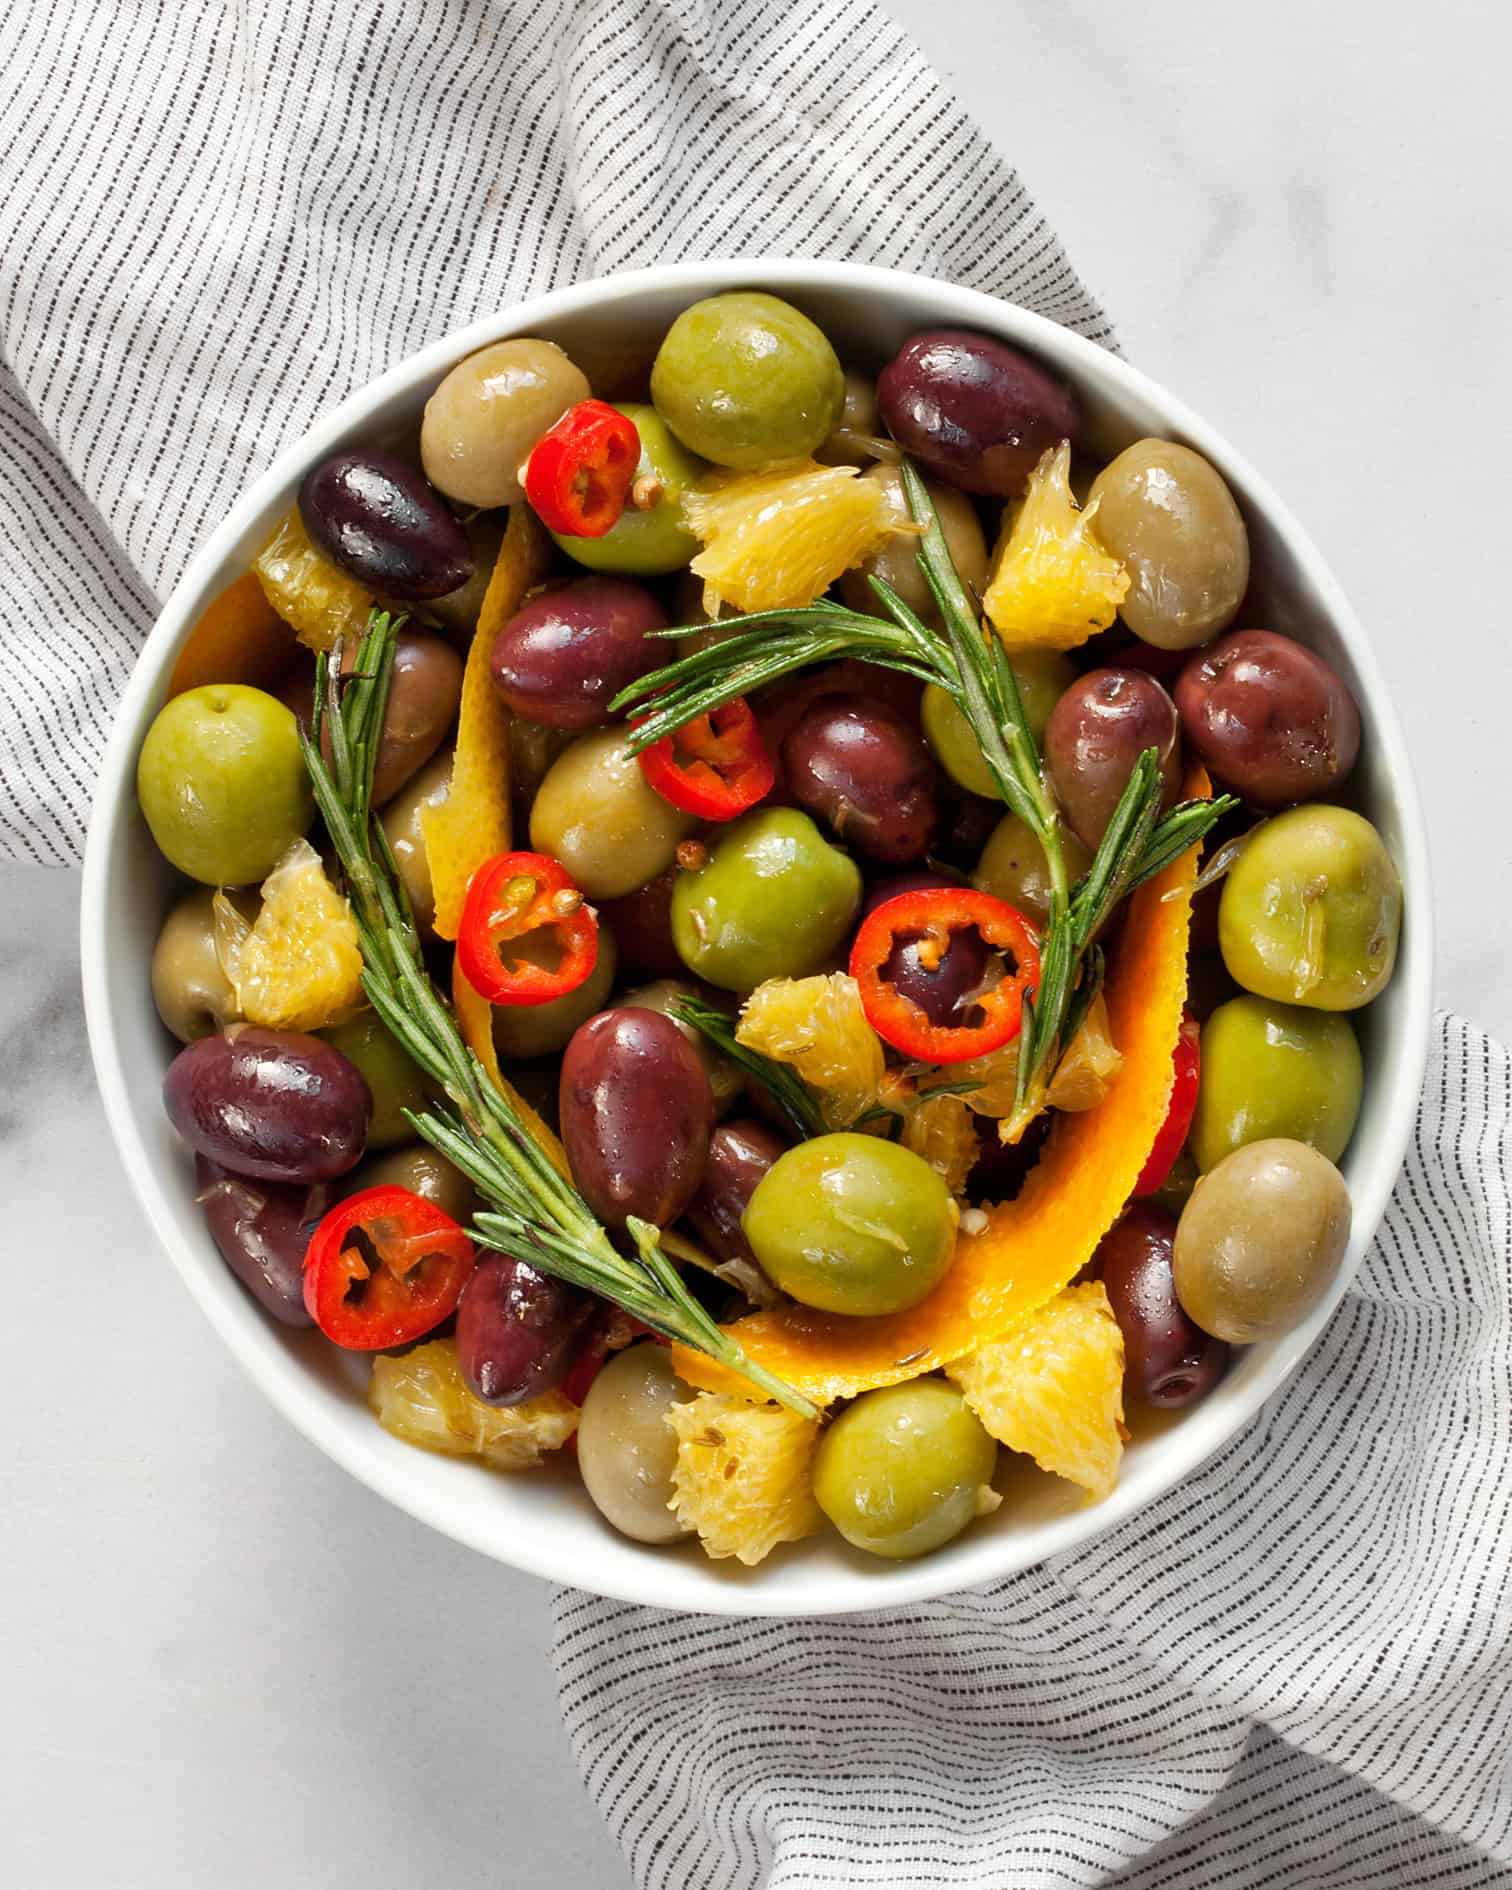 Half-ripe olives - Kyneton Olives, Great pickled and marina…